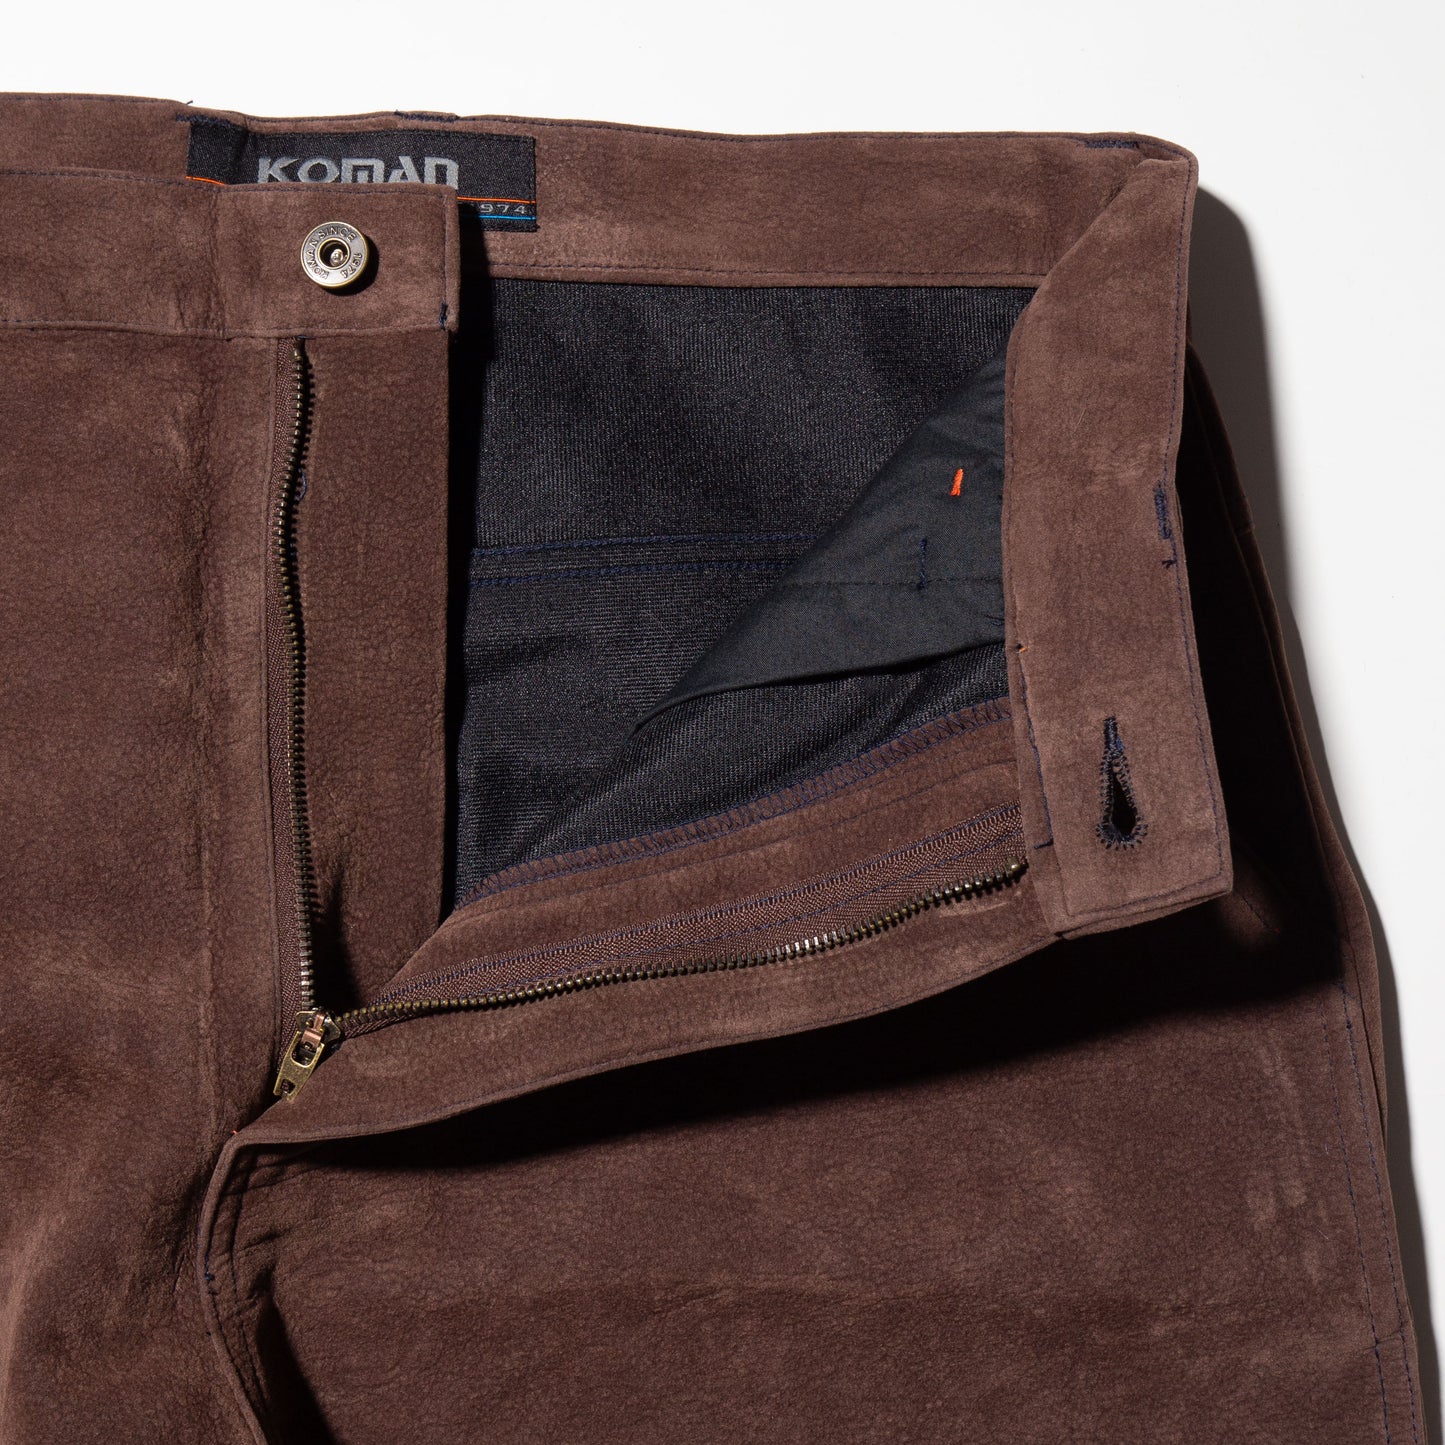 vintage faux suede baggy trousers , dead stock